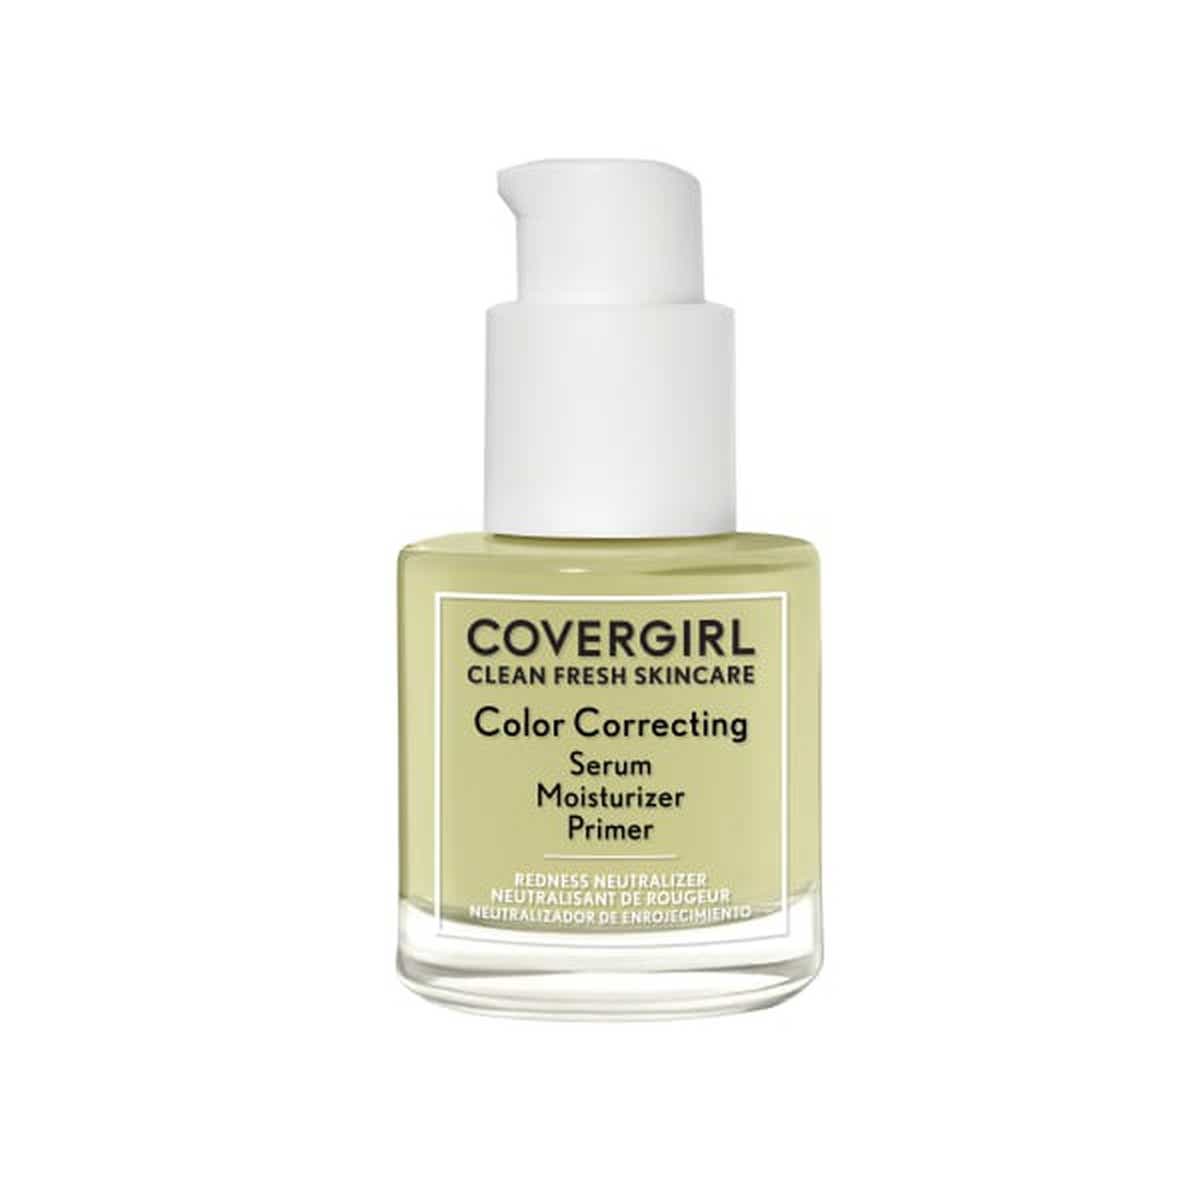 COVERGIRL Clean Fresh Skincare Color Correcting Serum Moisturizing Primer